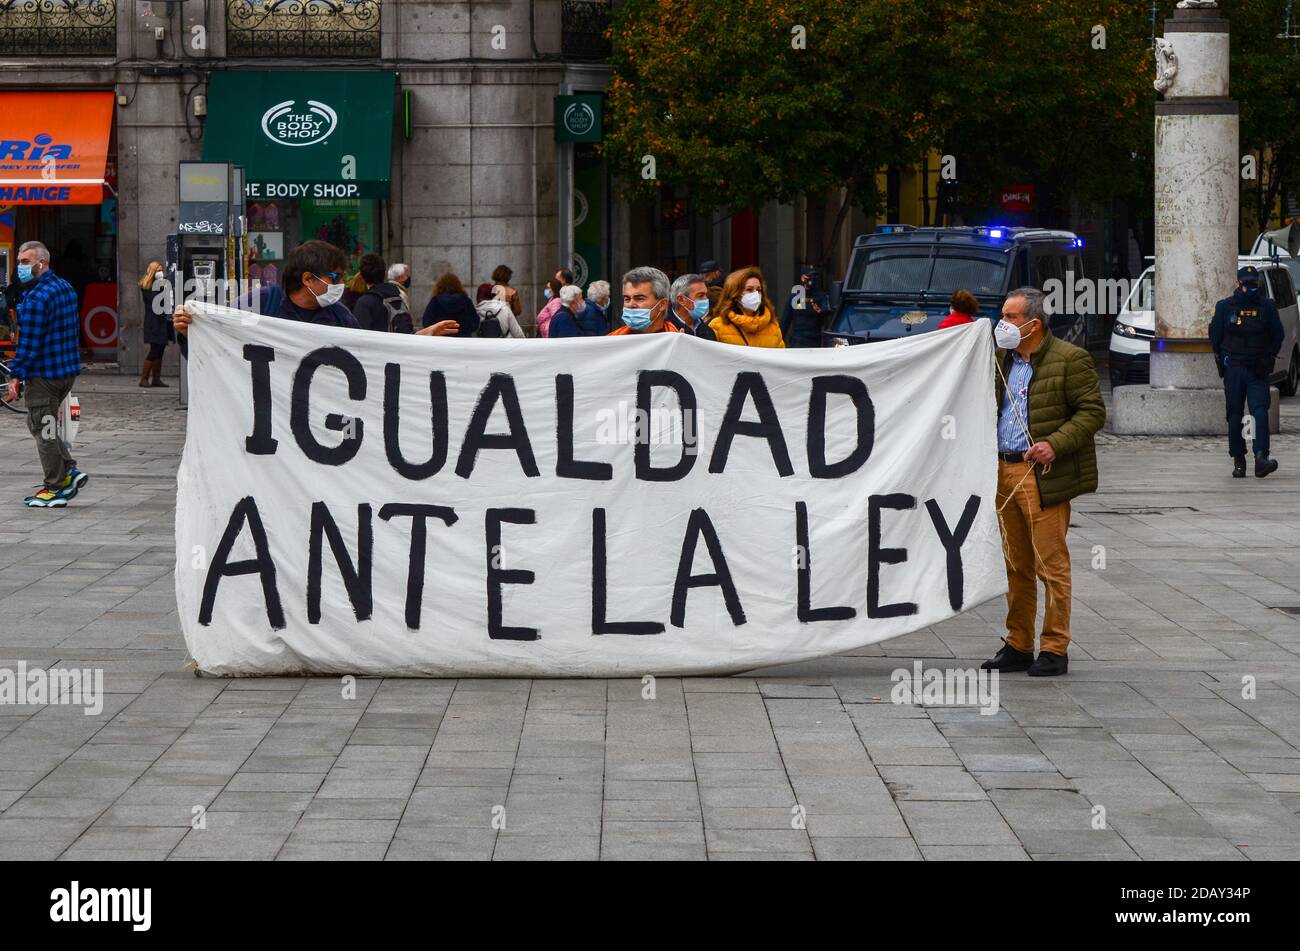 Antifeministischer Protest in Madrid, Spanien am 15. November 2020 Stockfoto